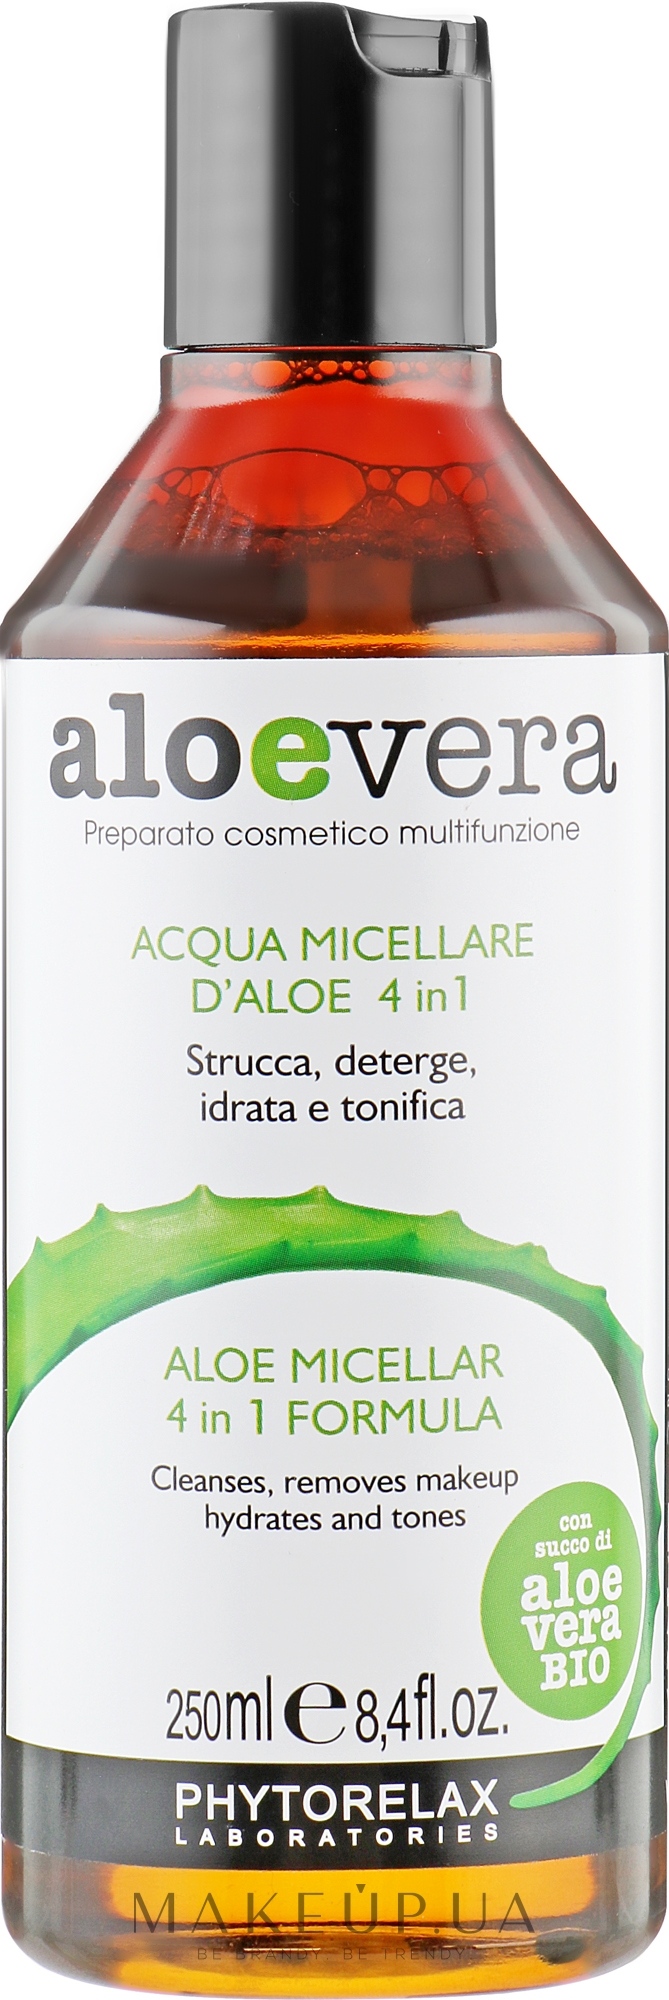 Міцелярна вода - Phytorelax Laboratories Aloe Vera Aloe Micellar 4 In 1 Formula — фото 250ml